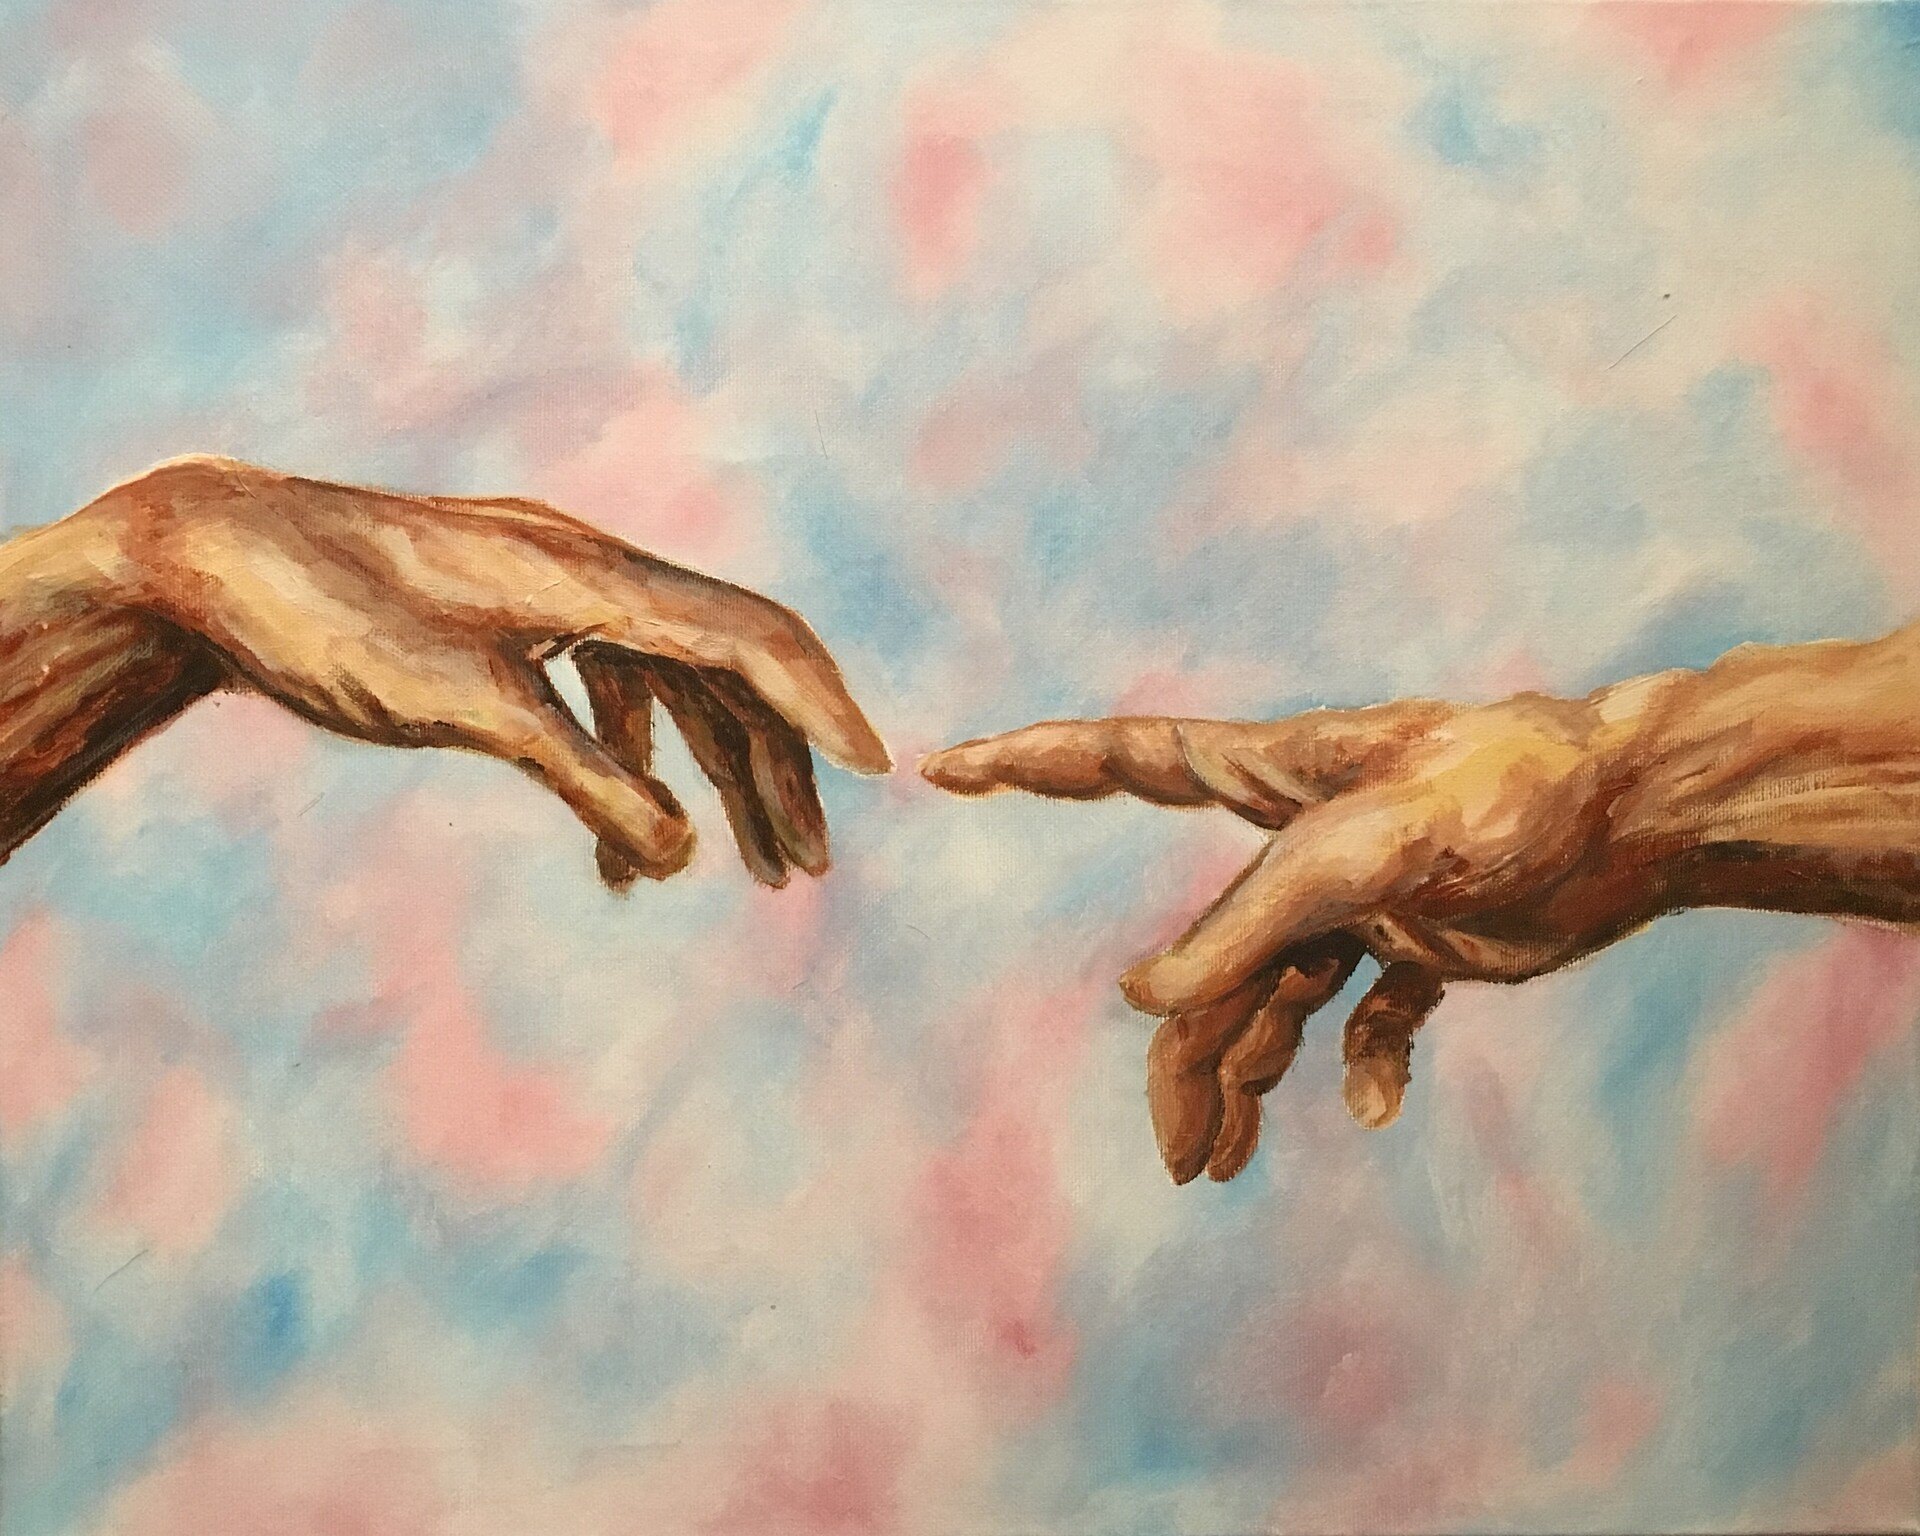 Поедем в две руки. Микеланджело Сотворение Адама руки. Сотворение Адама Микеланджело Эстетика. Сотворение Адама руки Эстетика. Микеланджело Сотворение Адама две руки.